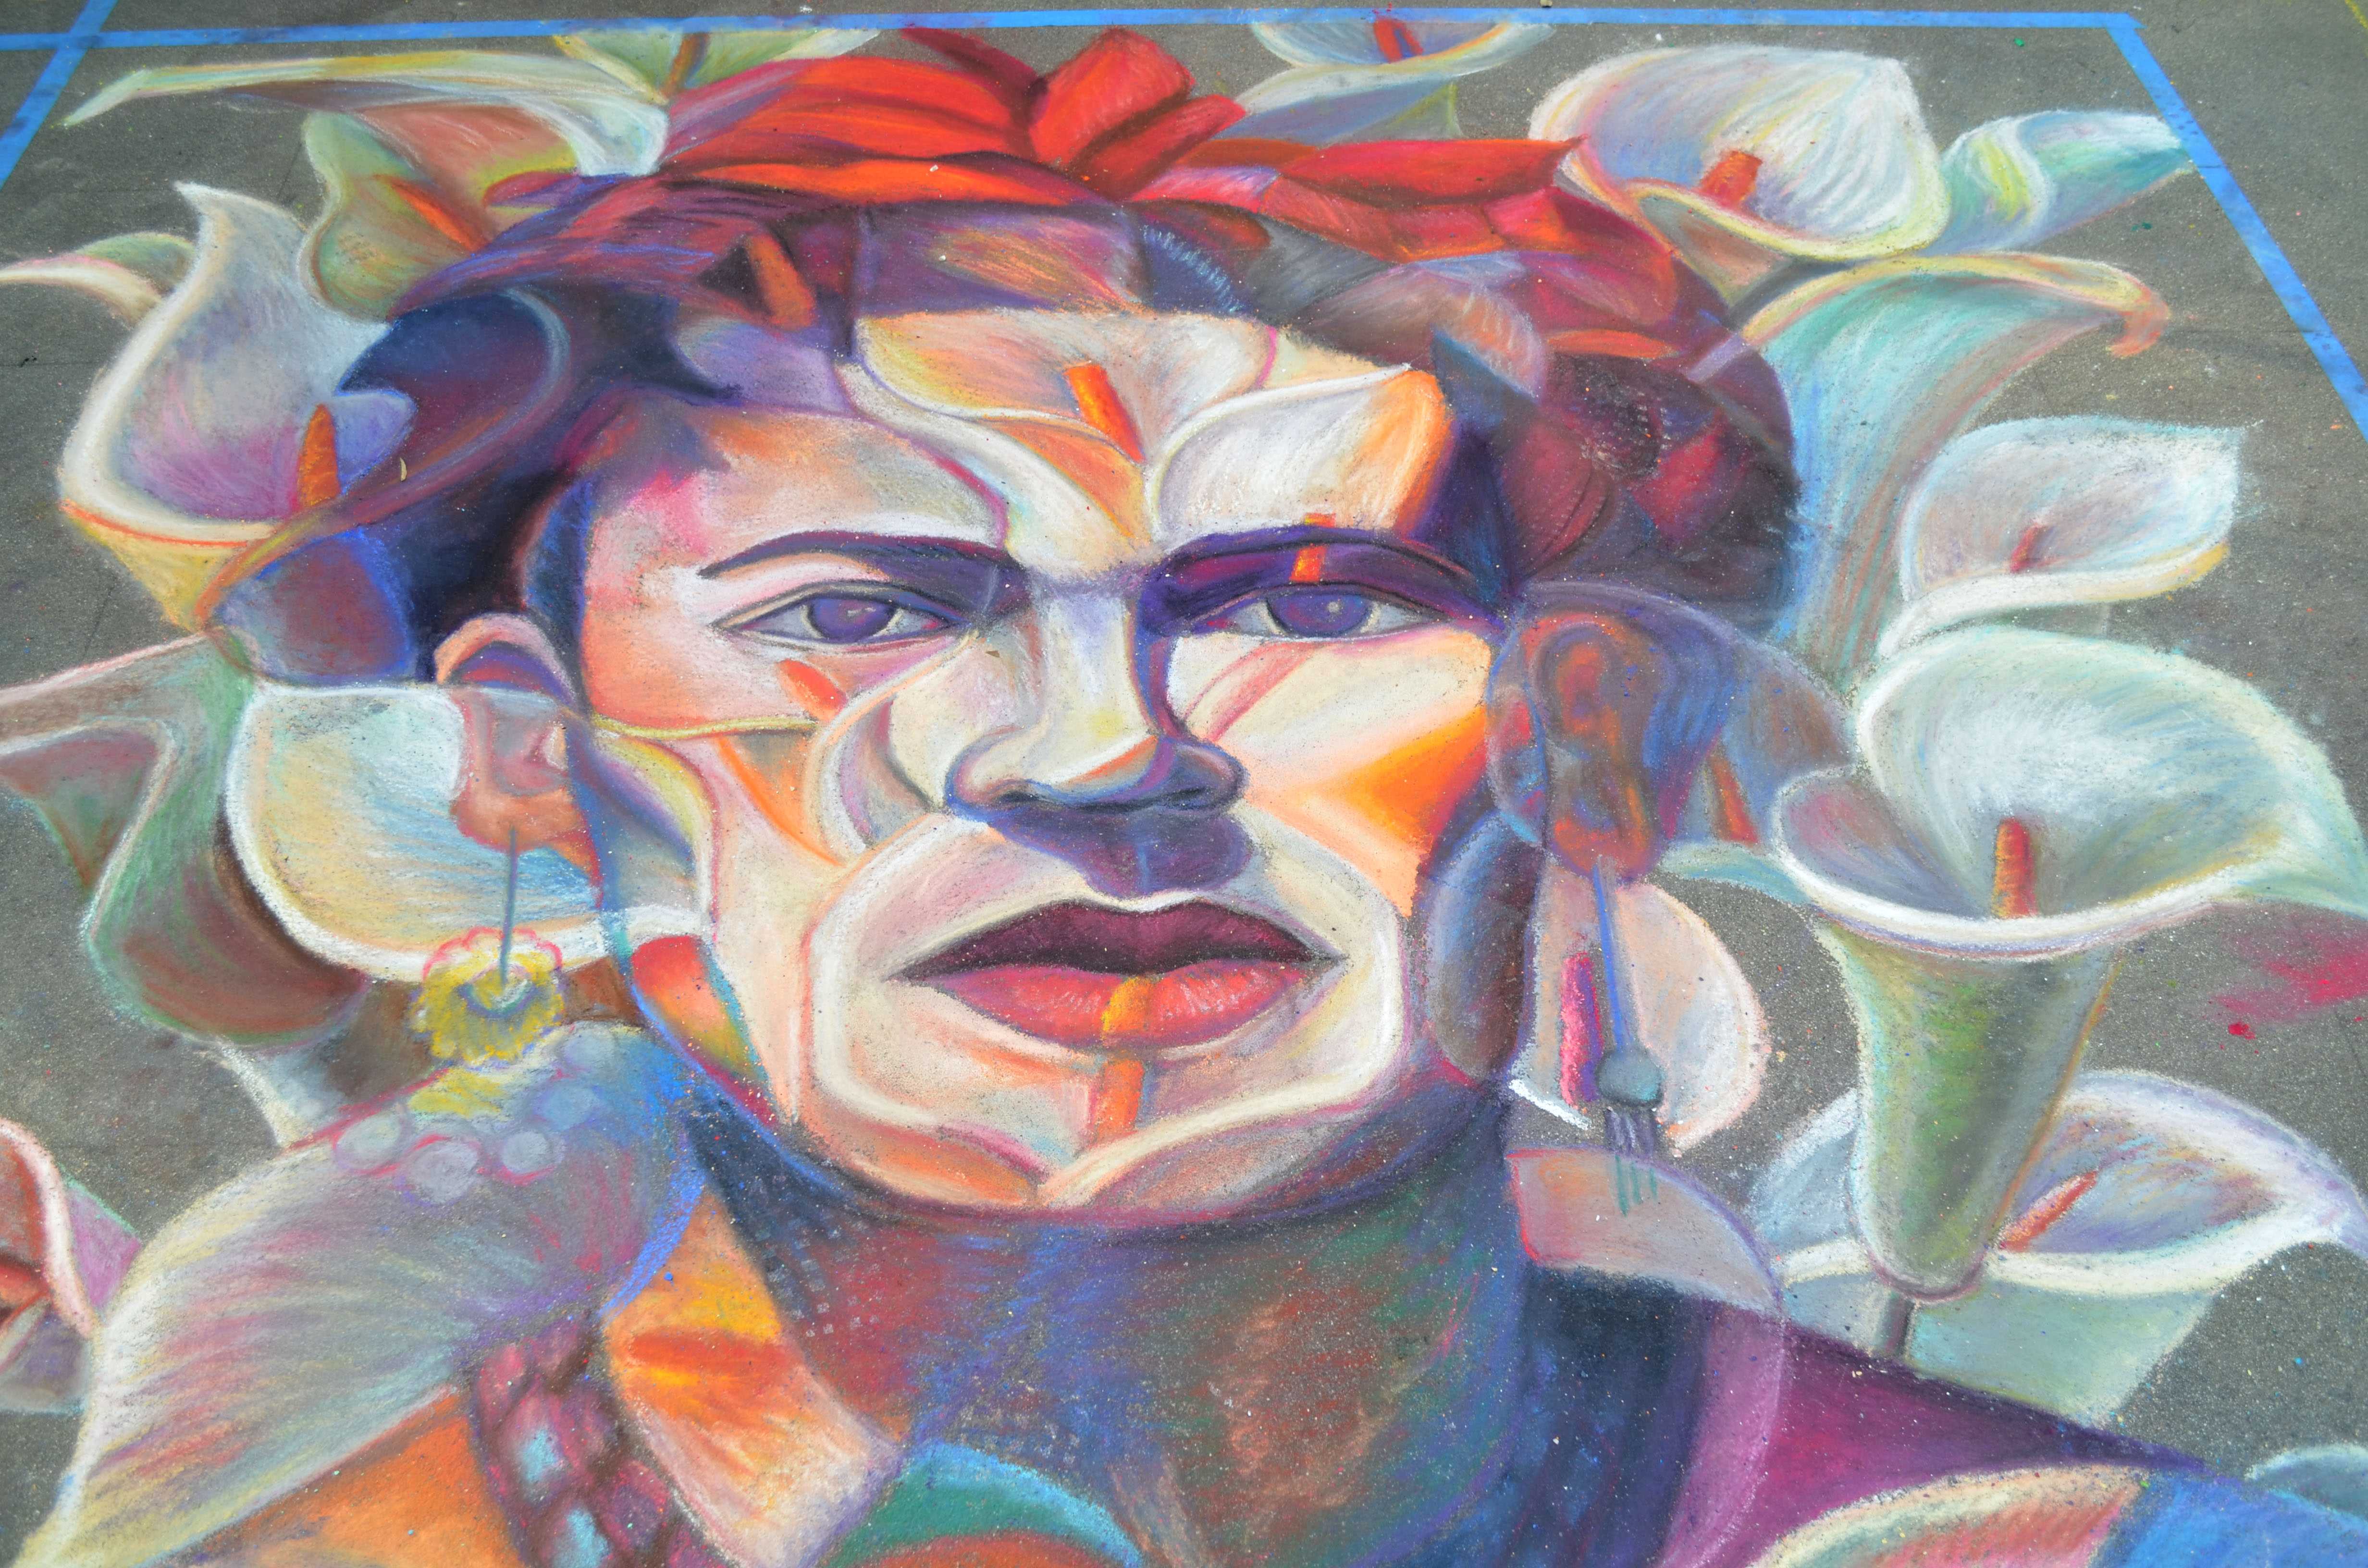 Chalk portrait of Frida Kahlo made of flowers